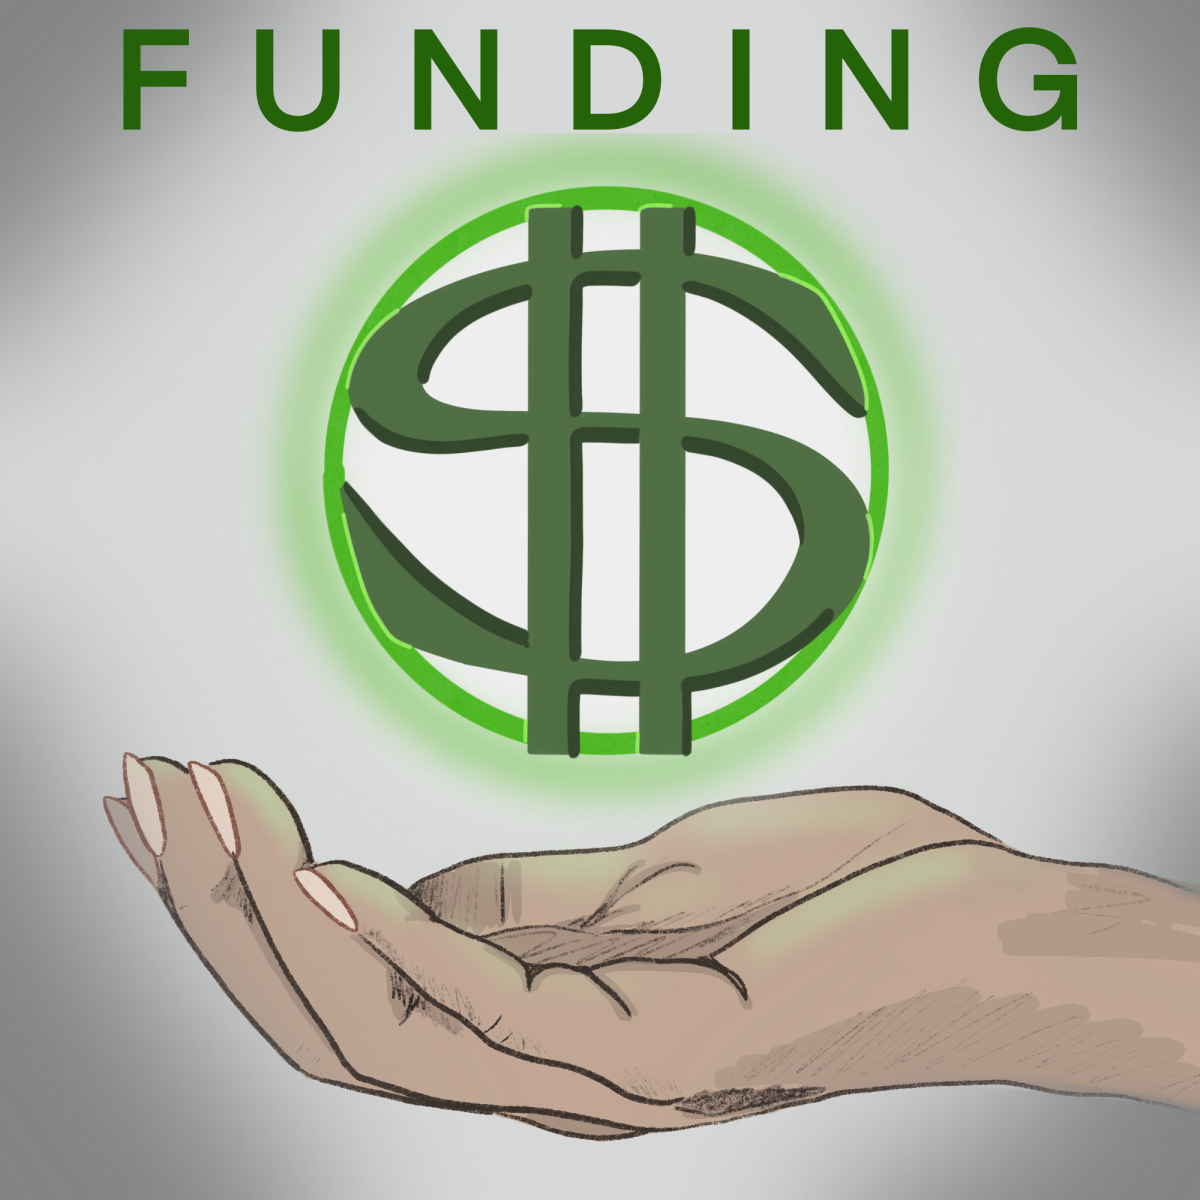 Funding, funds, money, etc etc